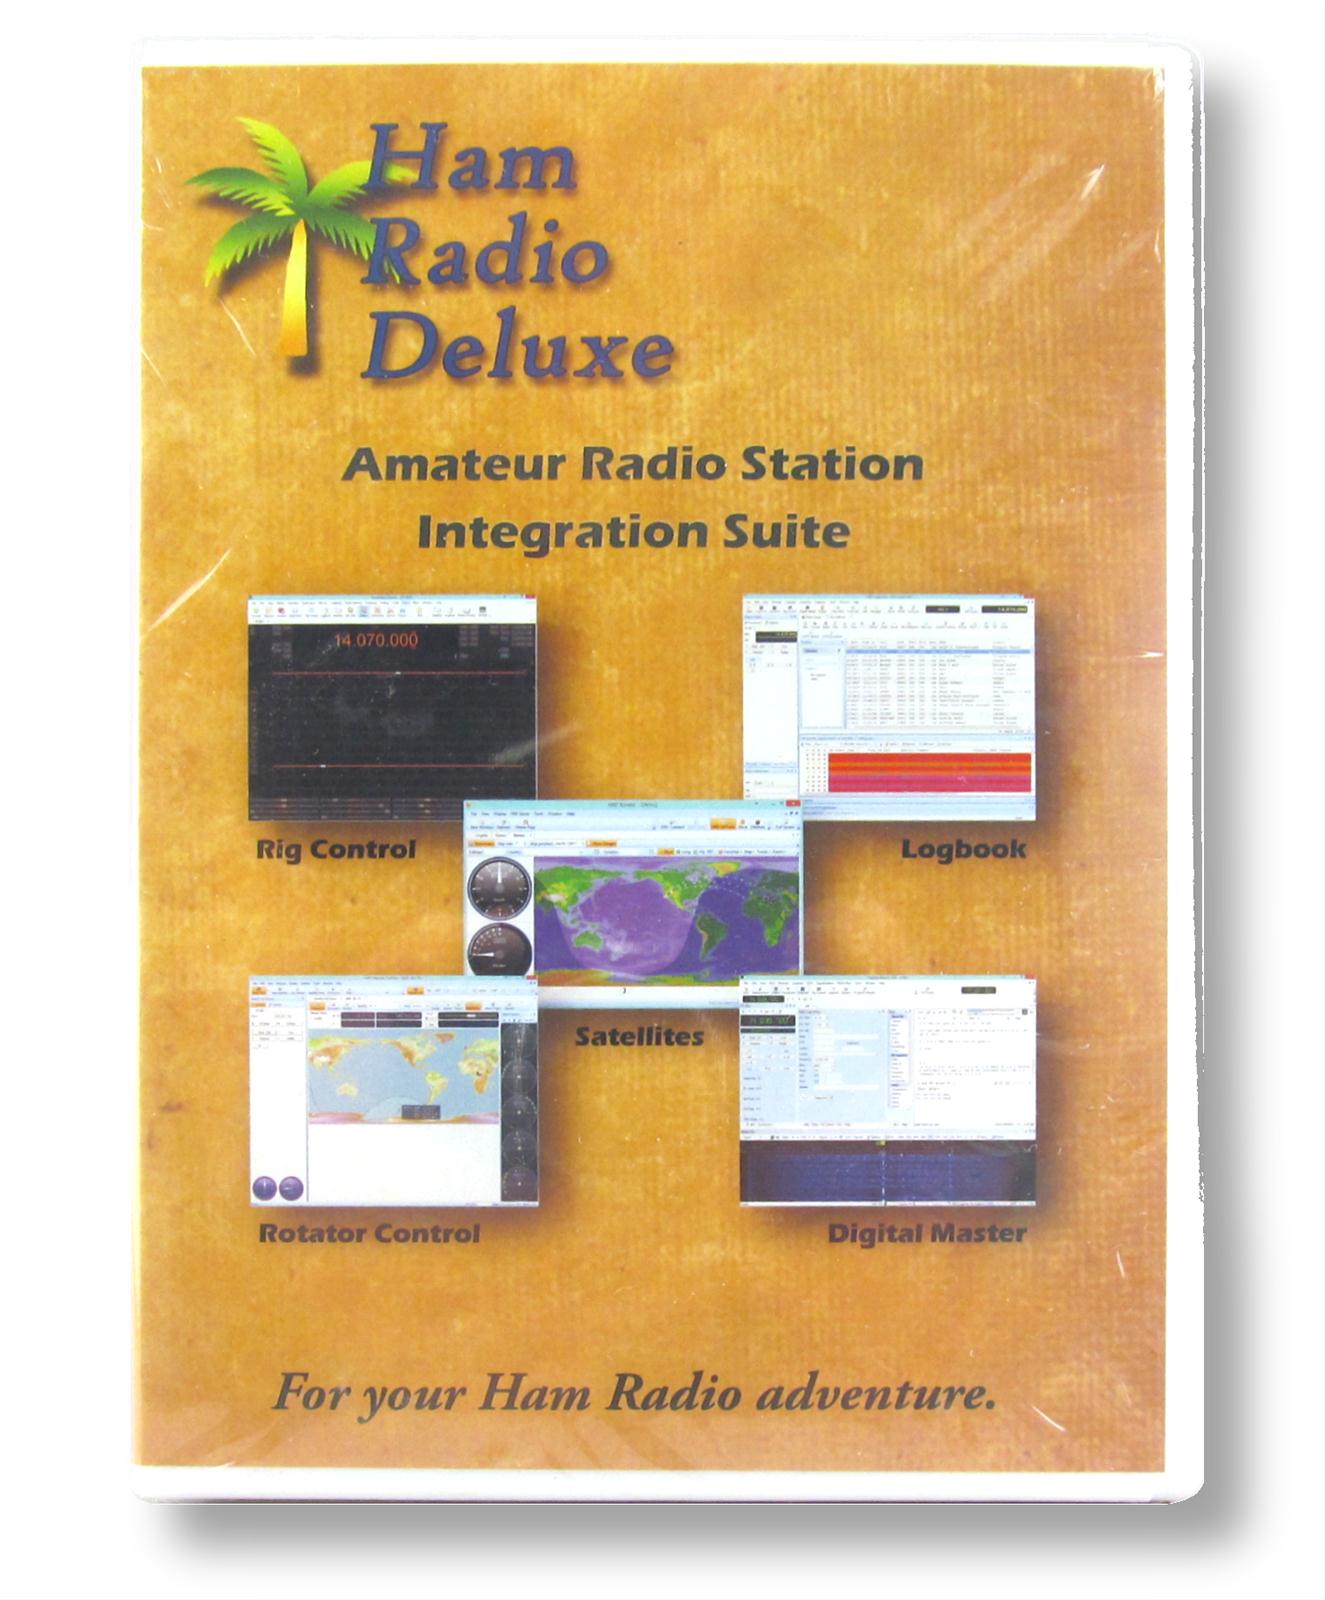 ham radio deluxe software review